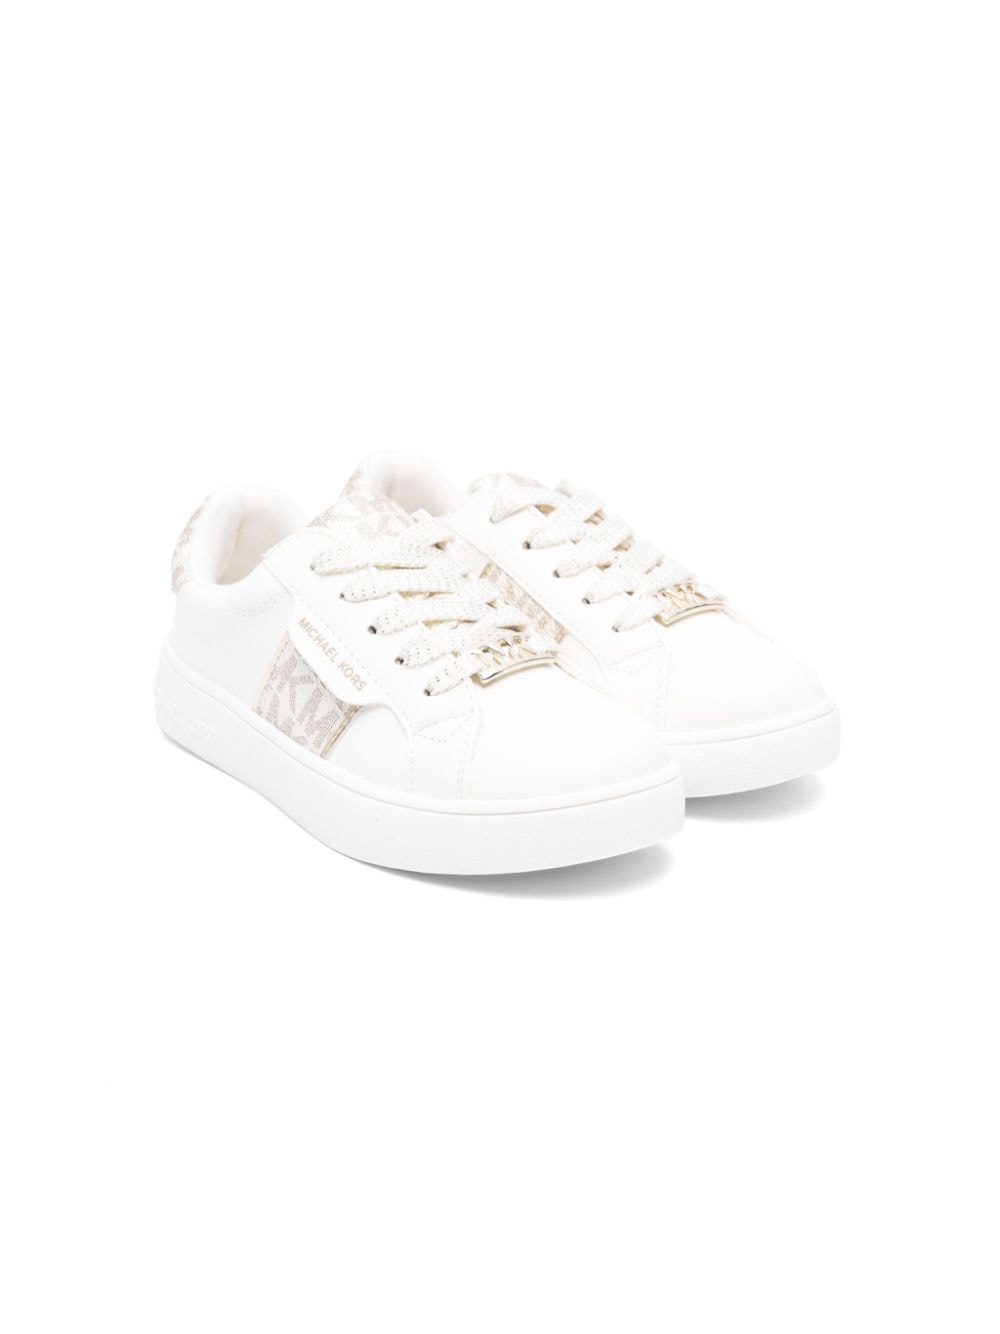 Michael Kors Kids Jem Maxine sneakers White